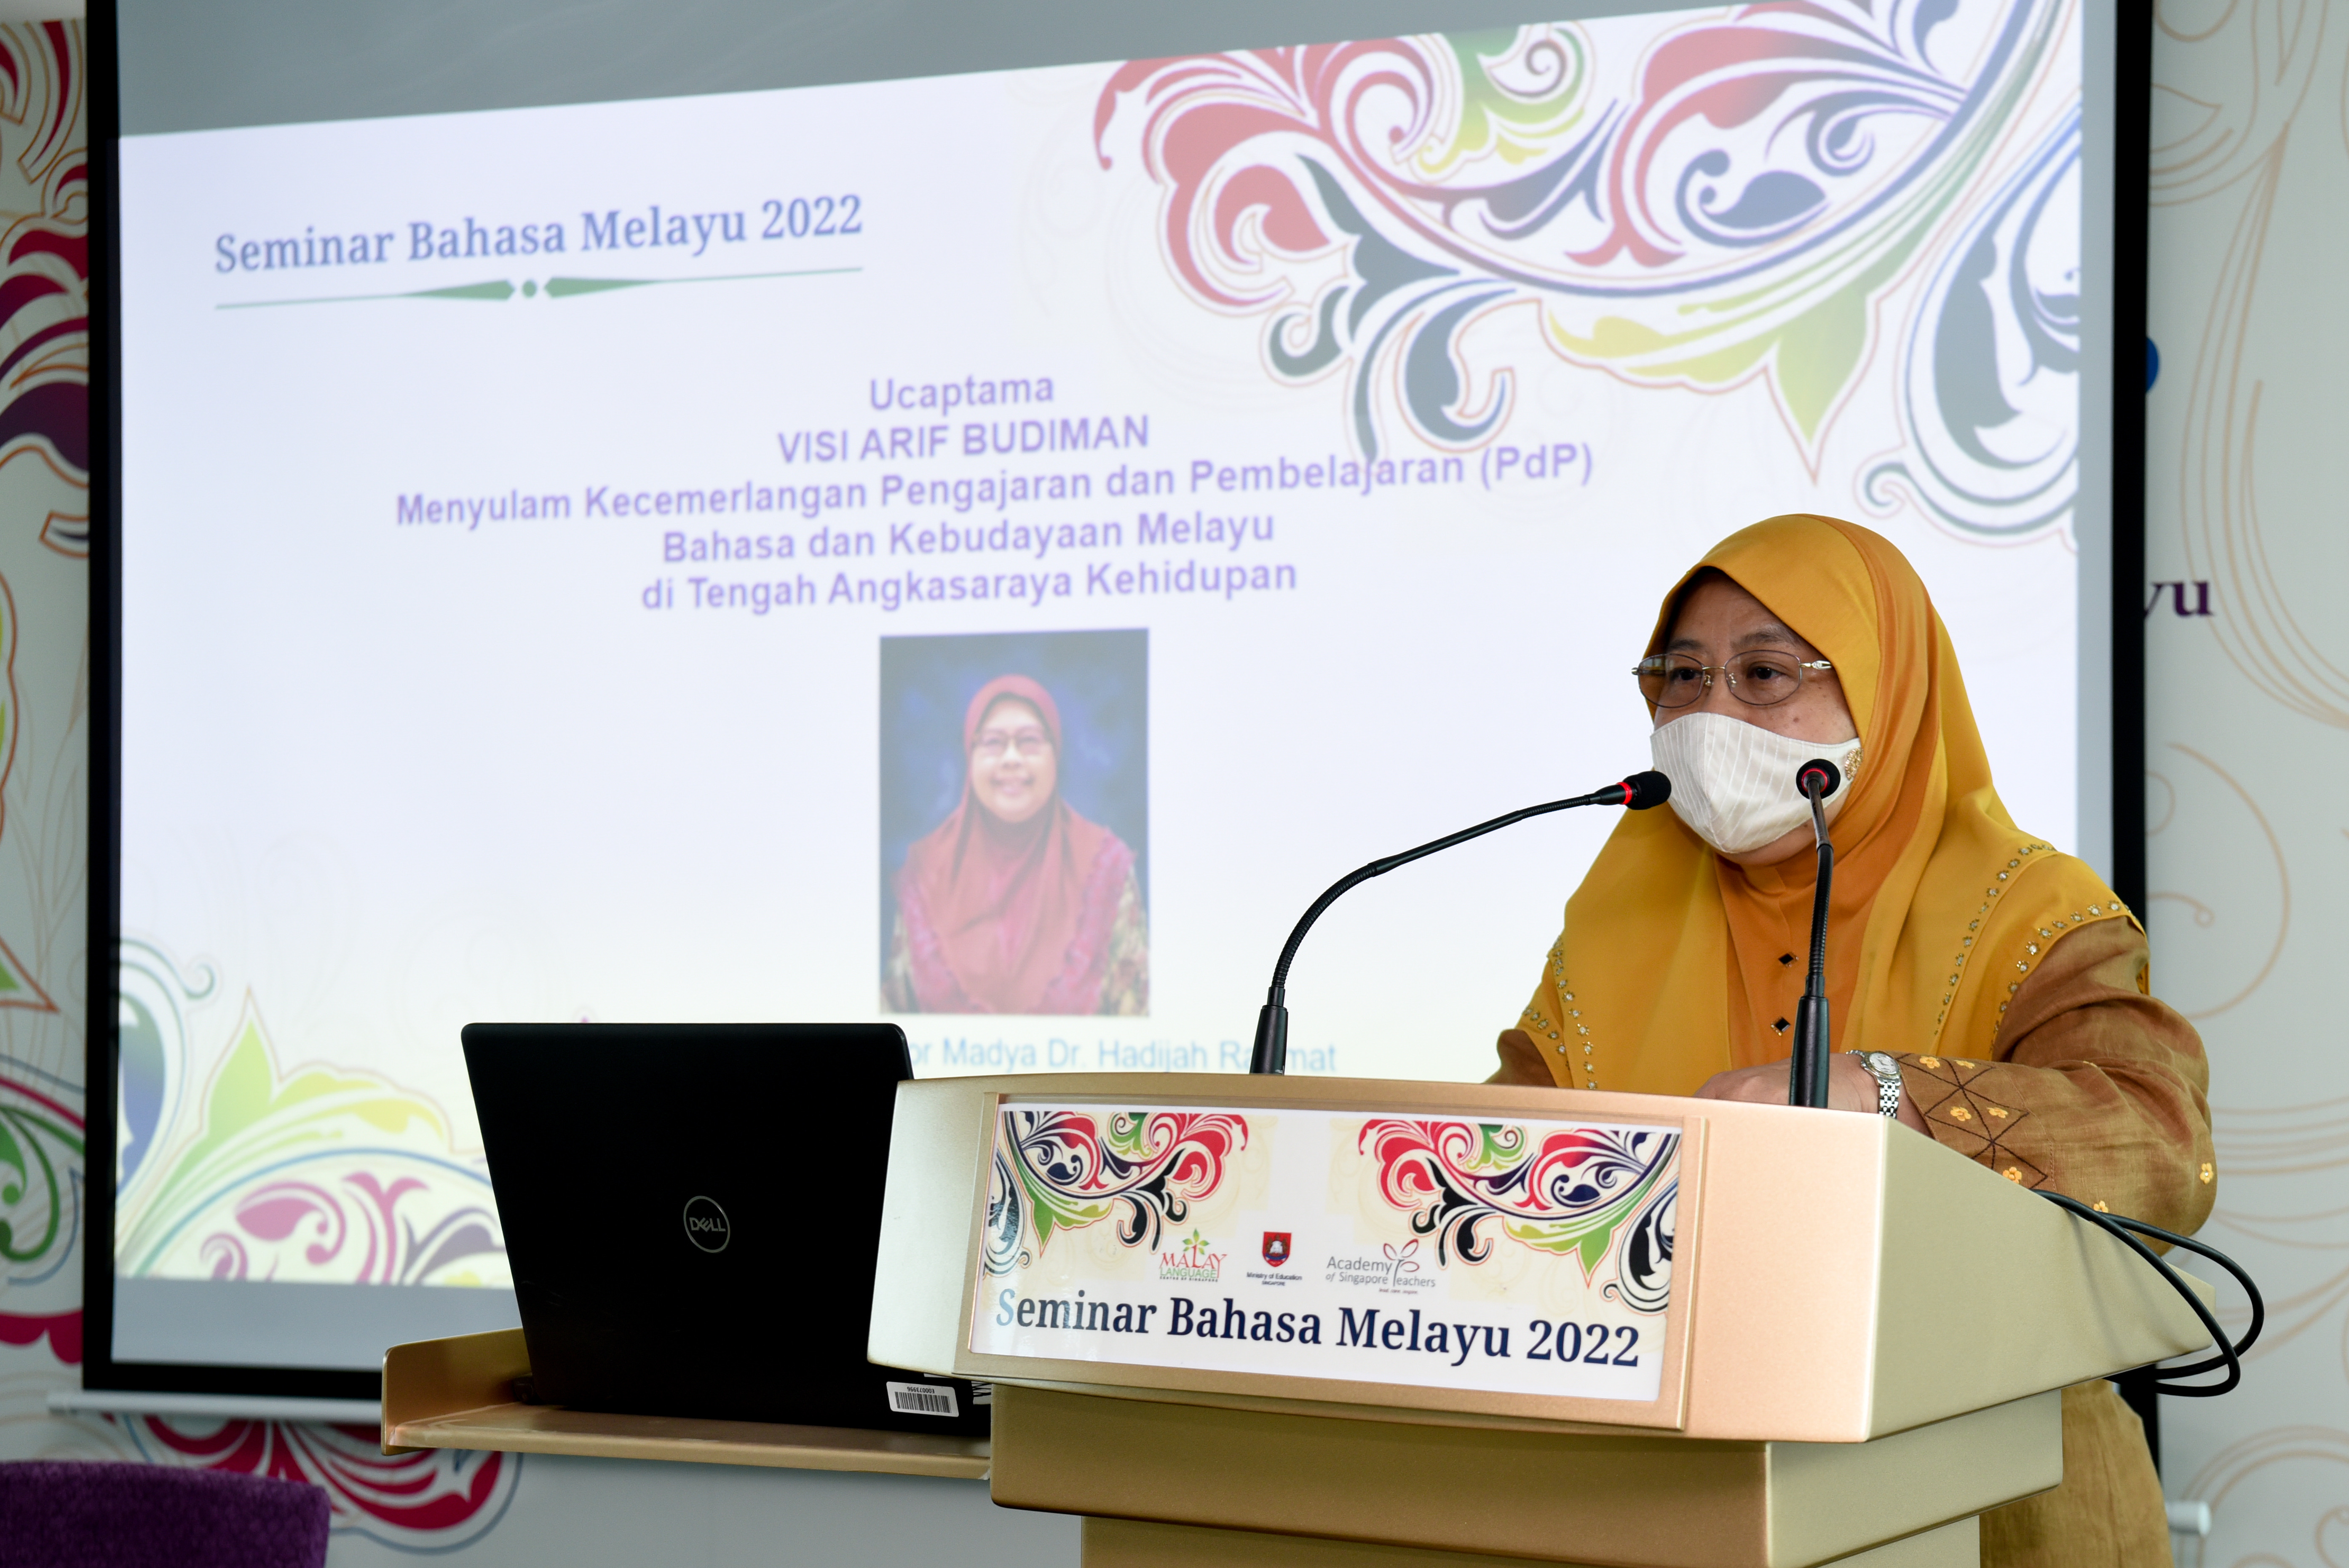 Seminar Bahasa Melayu 2022